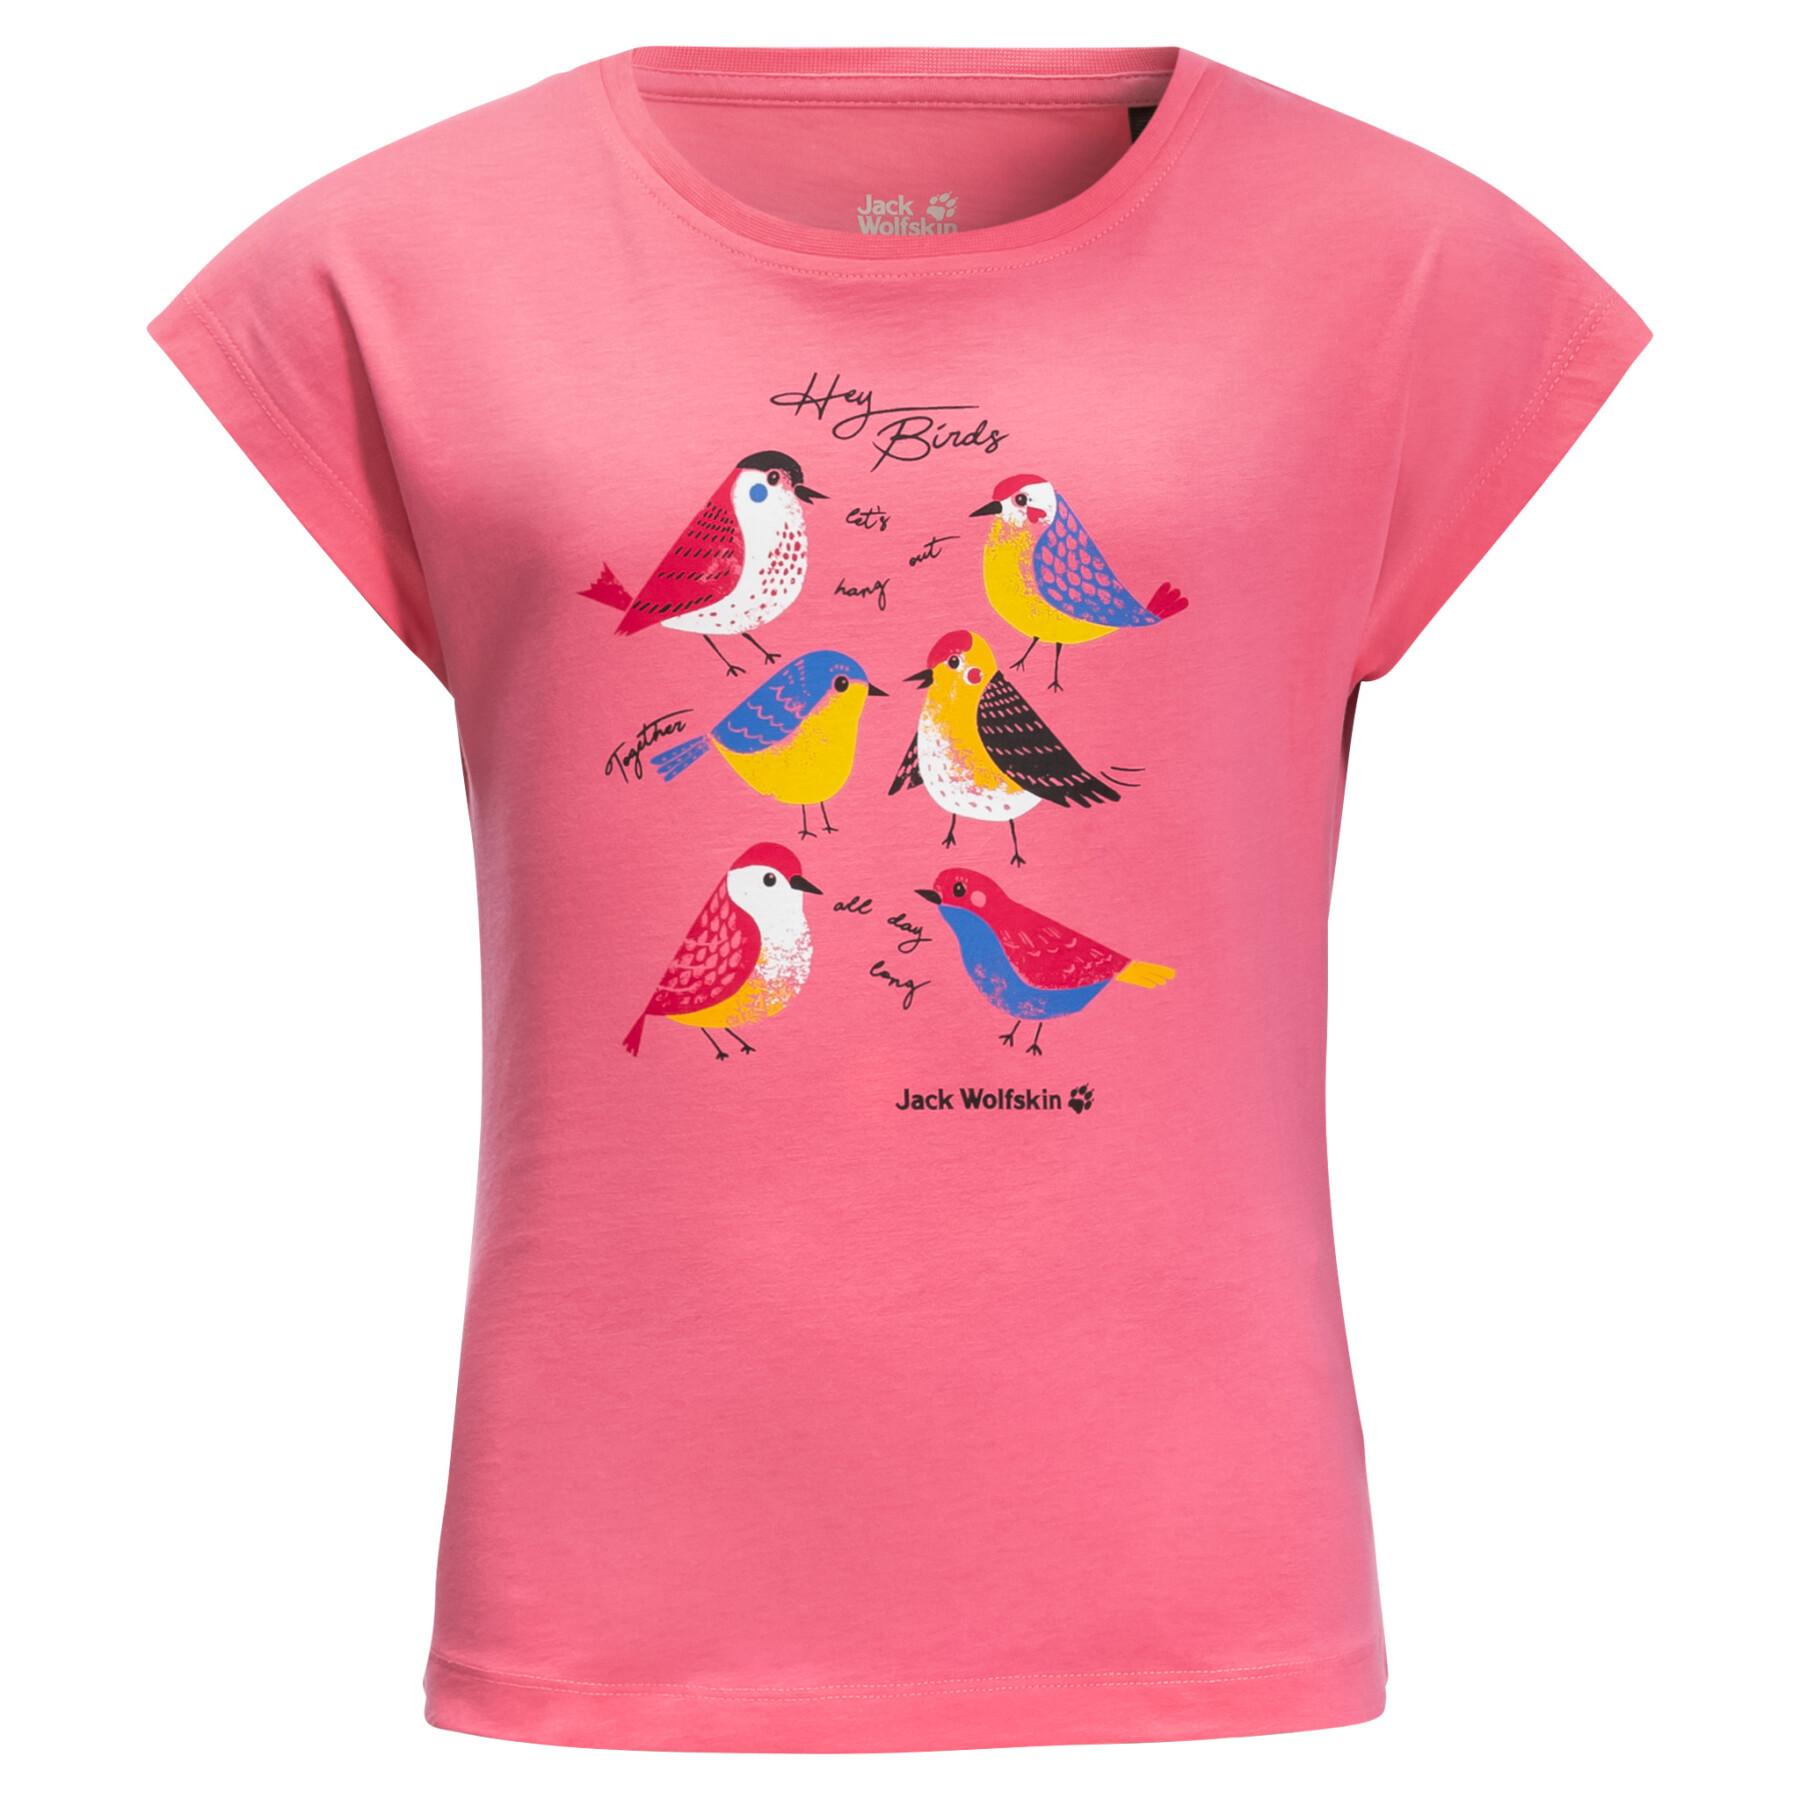 T-shirt de rapariga Jack Wolfskin Tweeting Birds